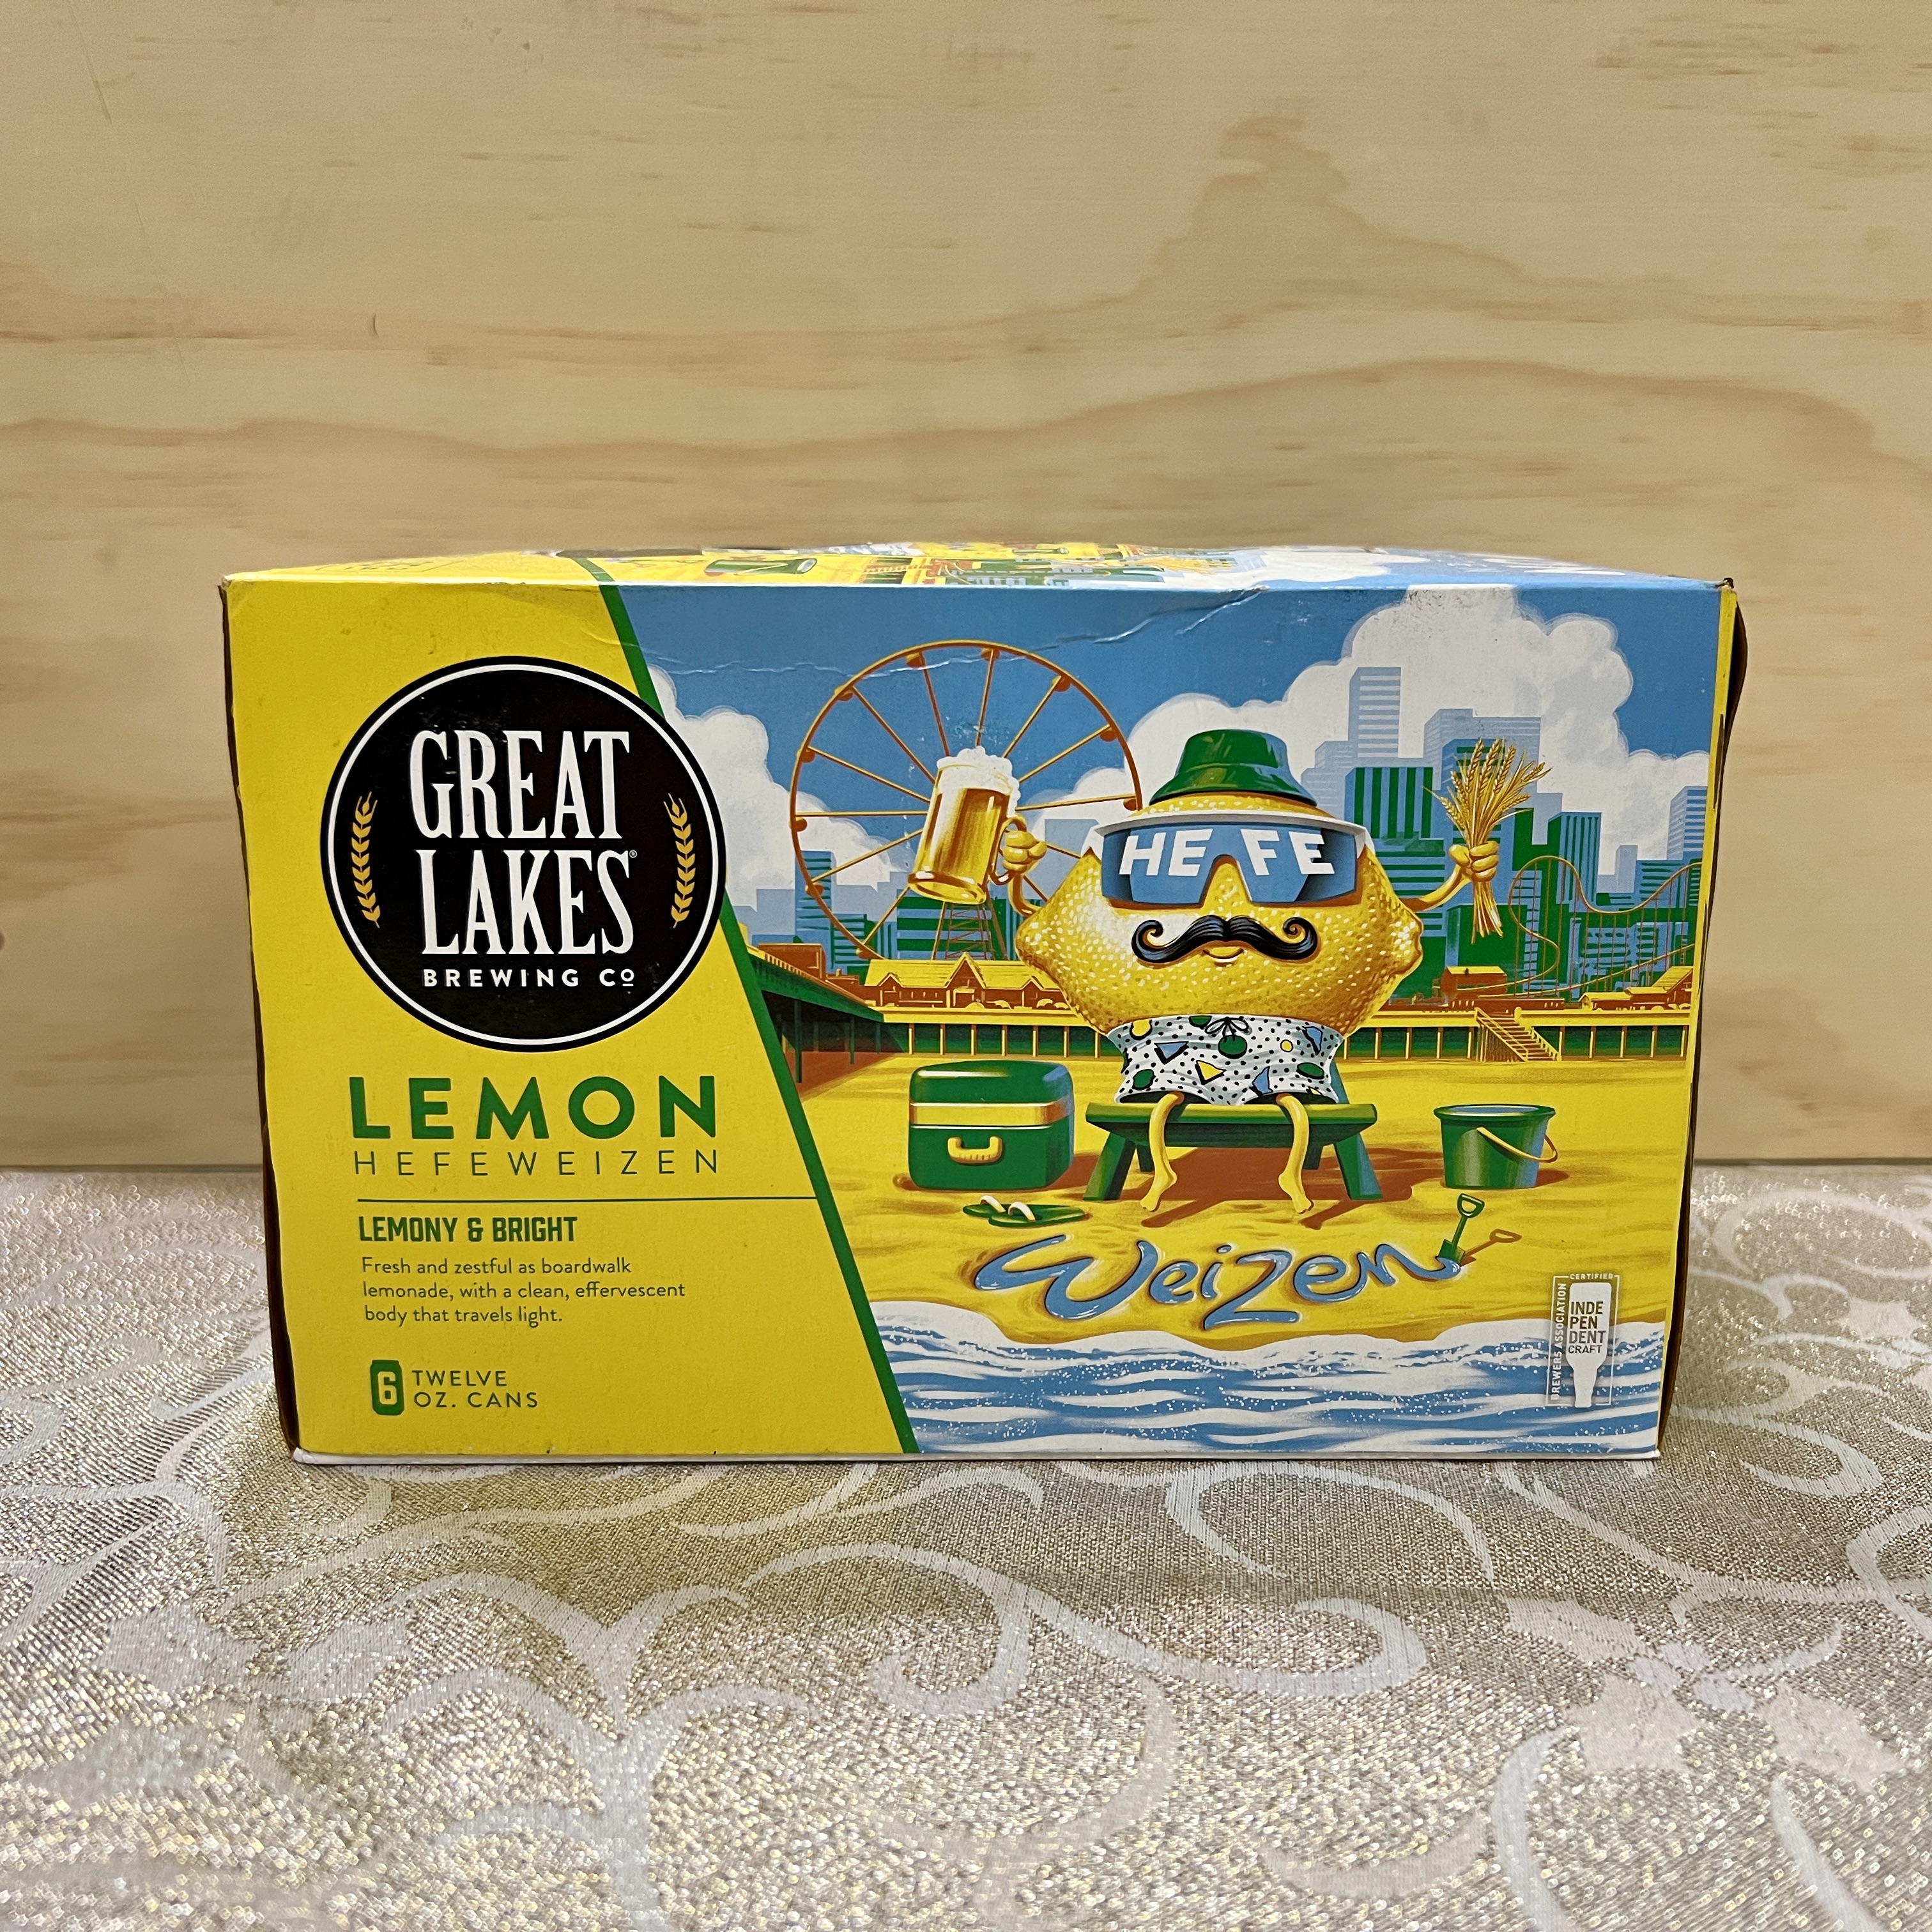 Great Lakes Lemon Hefeweizen 6 x 12oz cans